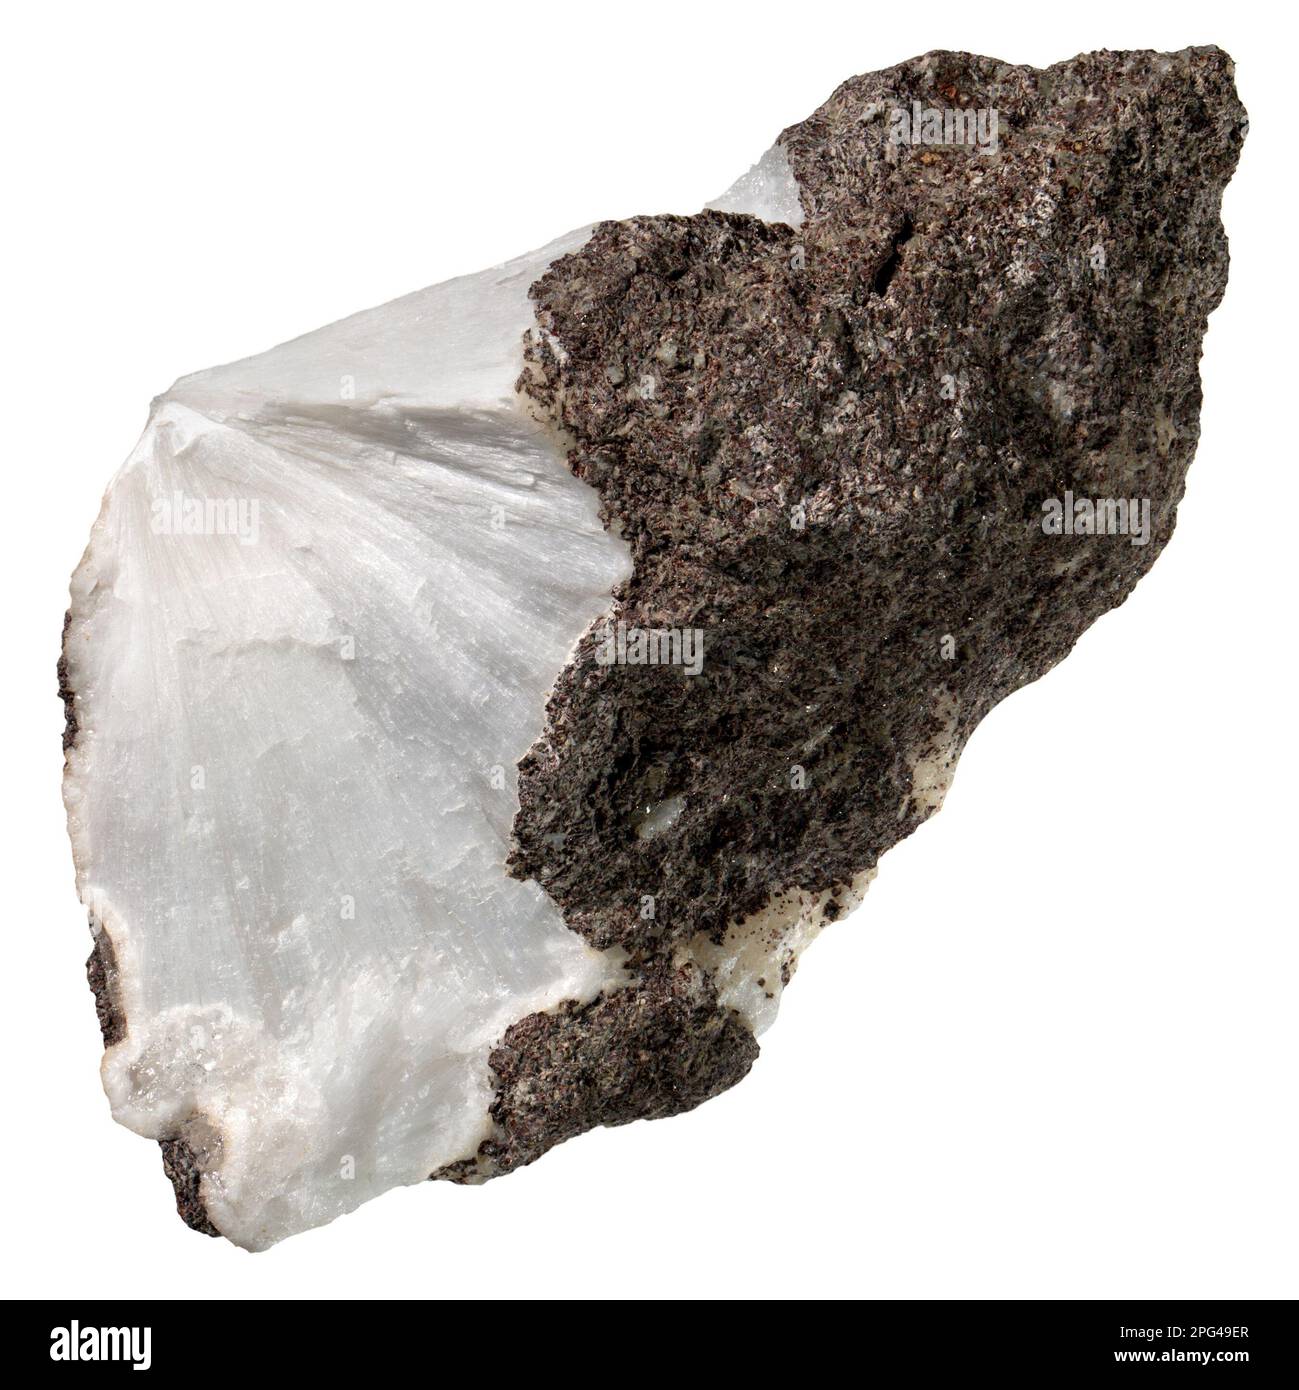 Natrolit - Hydratnatrium und Aluminiumsilikat [Na2Al2Si3O10] Tectosilikat-Mineral der Zeolith-Gruppe. Magheramourne, Antrim, Nordirland. Stockfoto